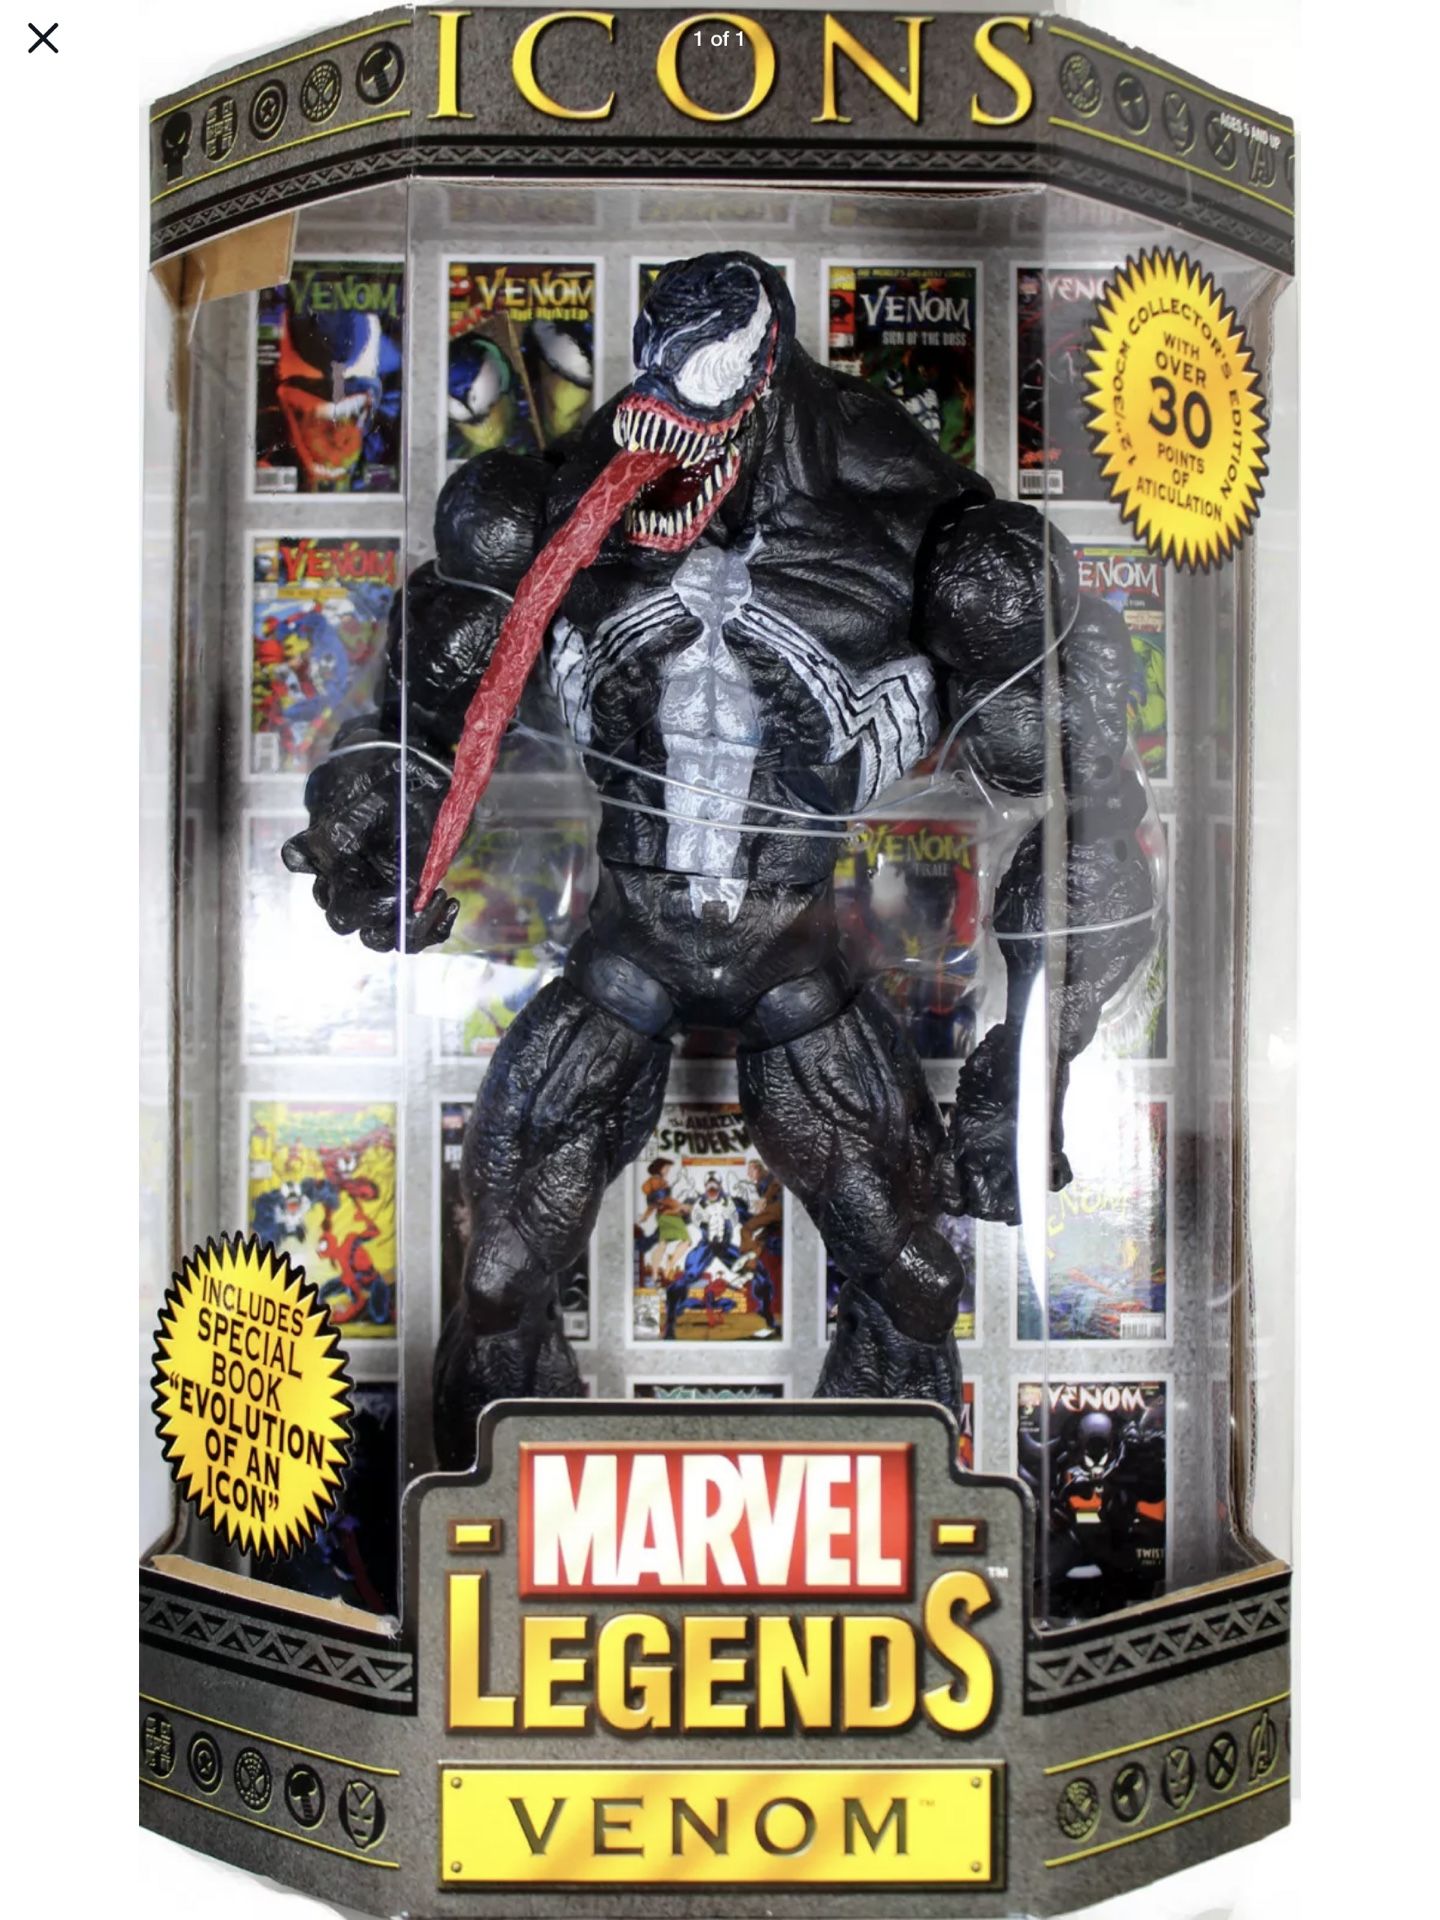 Venom - Marvel Legends - Icons - Includes Comic - Large Figure - Mint Condition - Brand New - Exclusive Toys